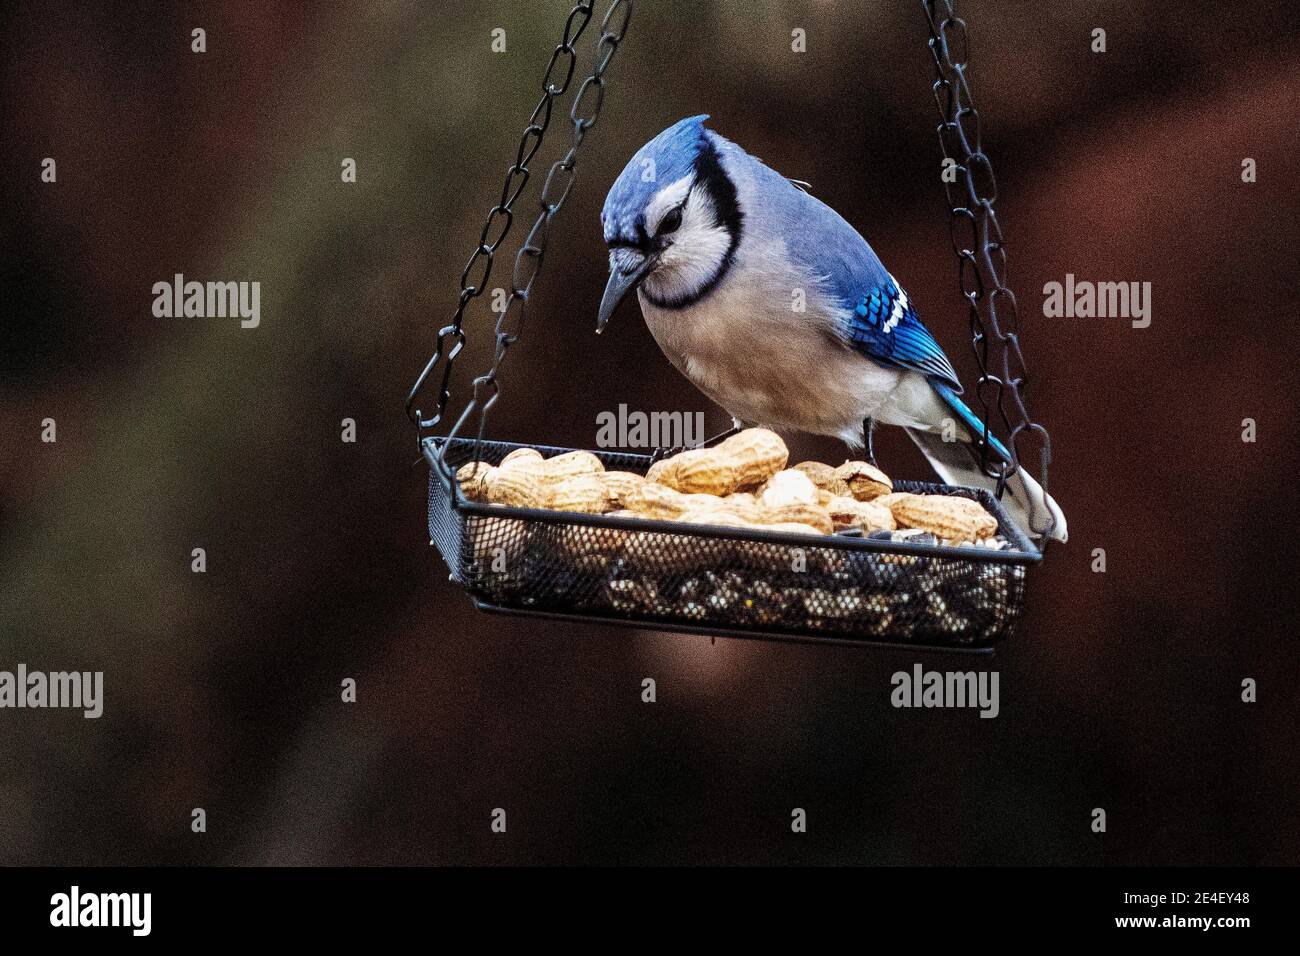 Blue jay at backyard feeder with peanuts Stock Photo